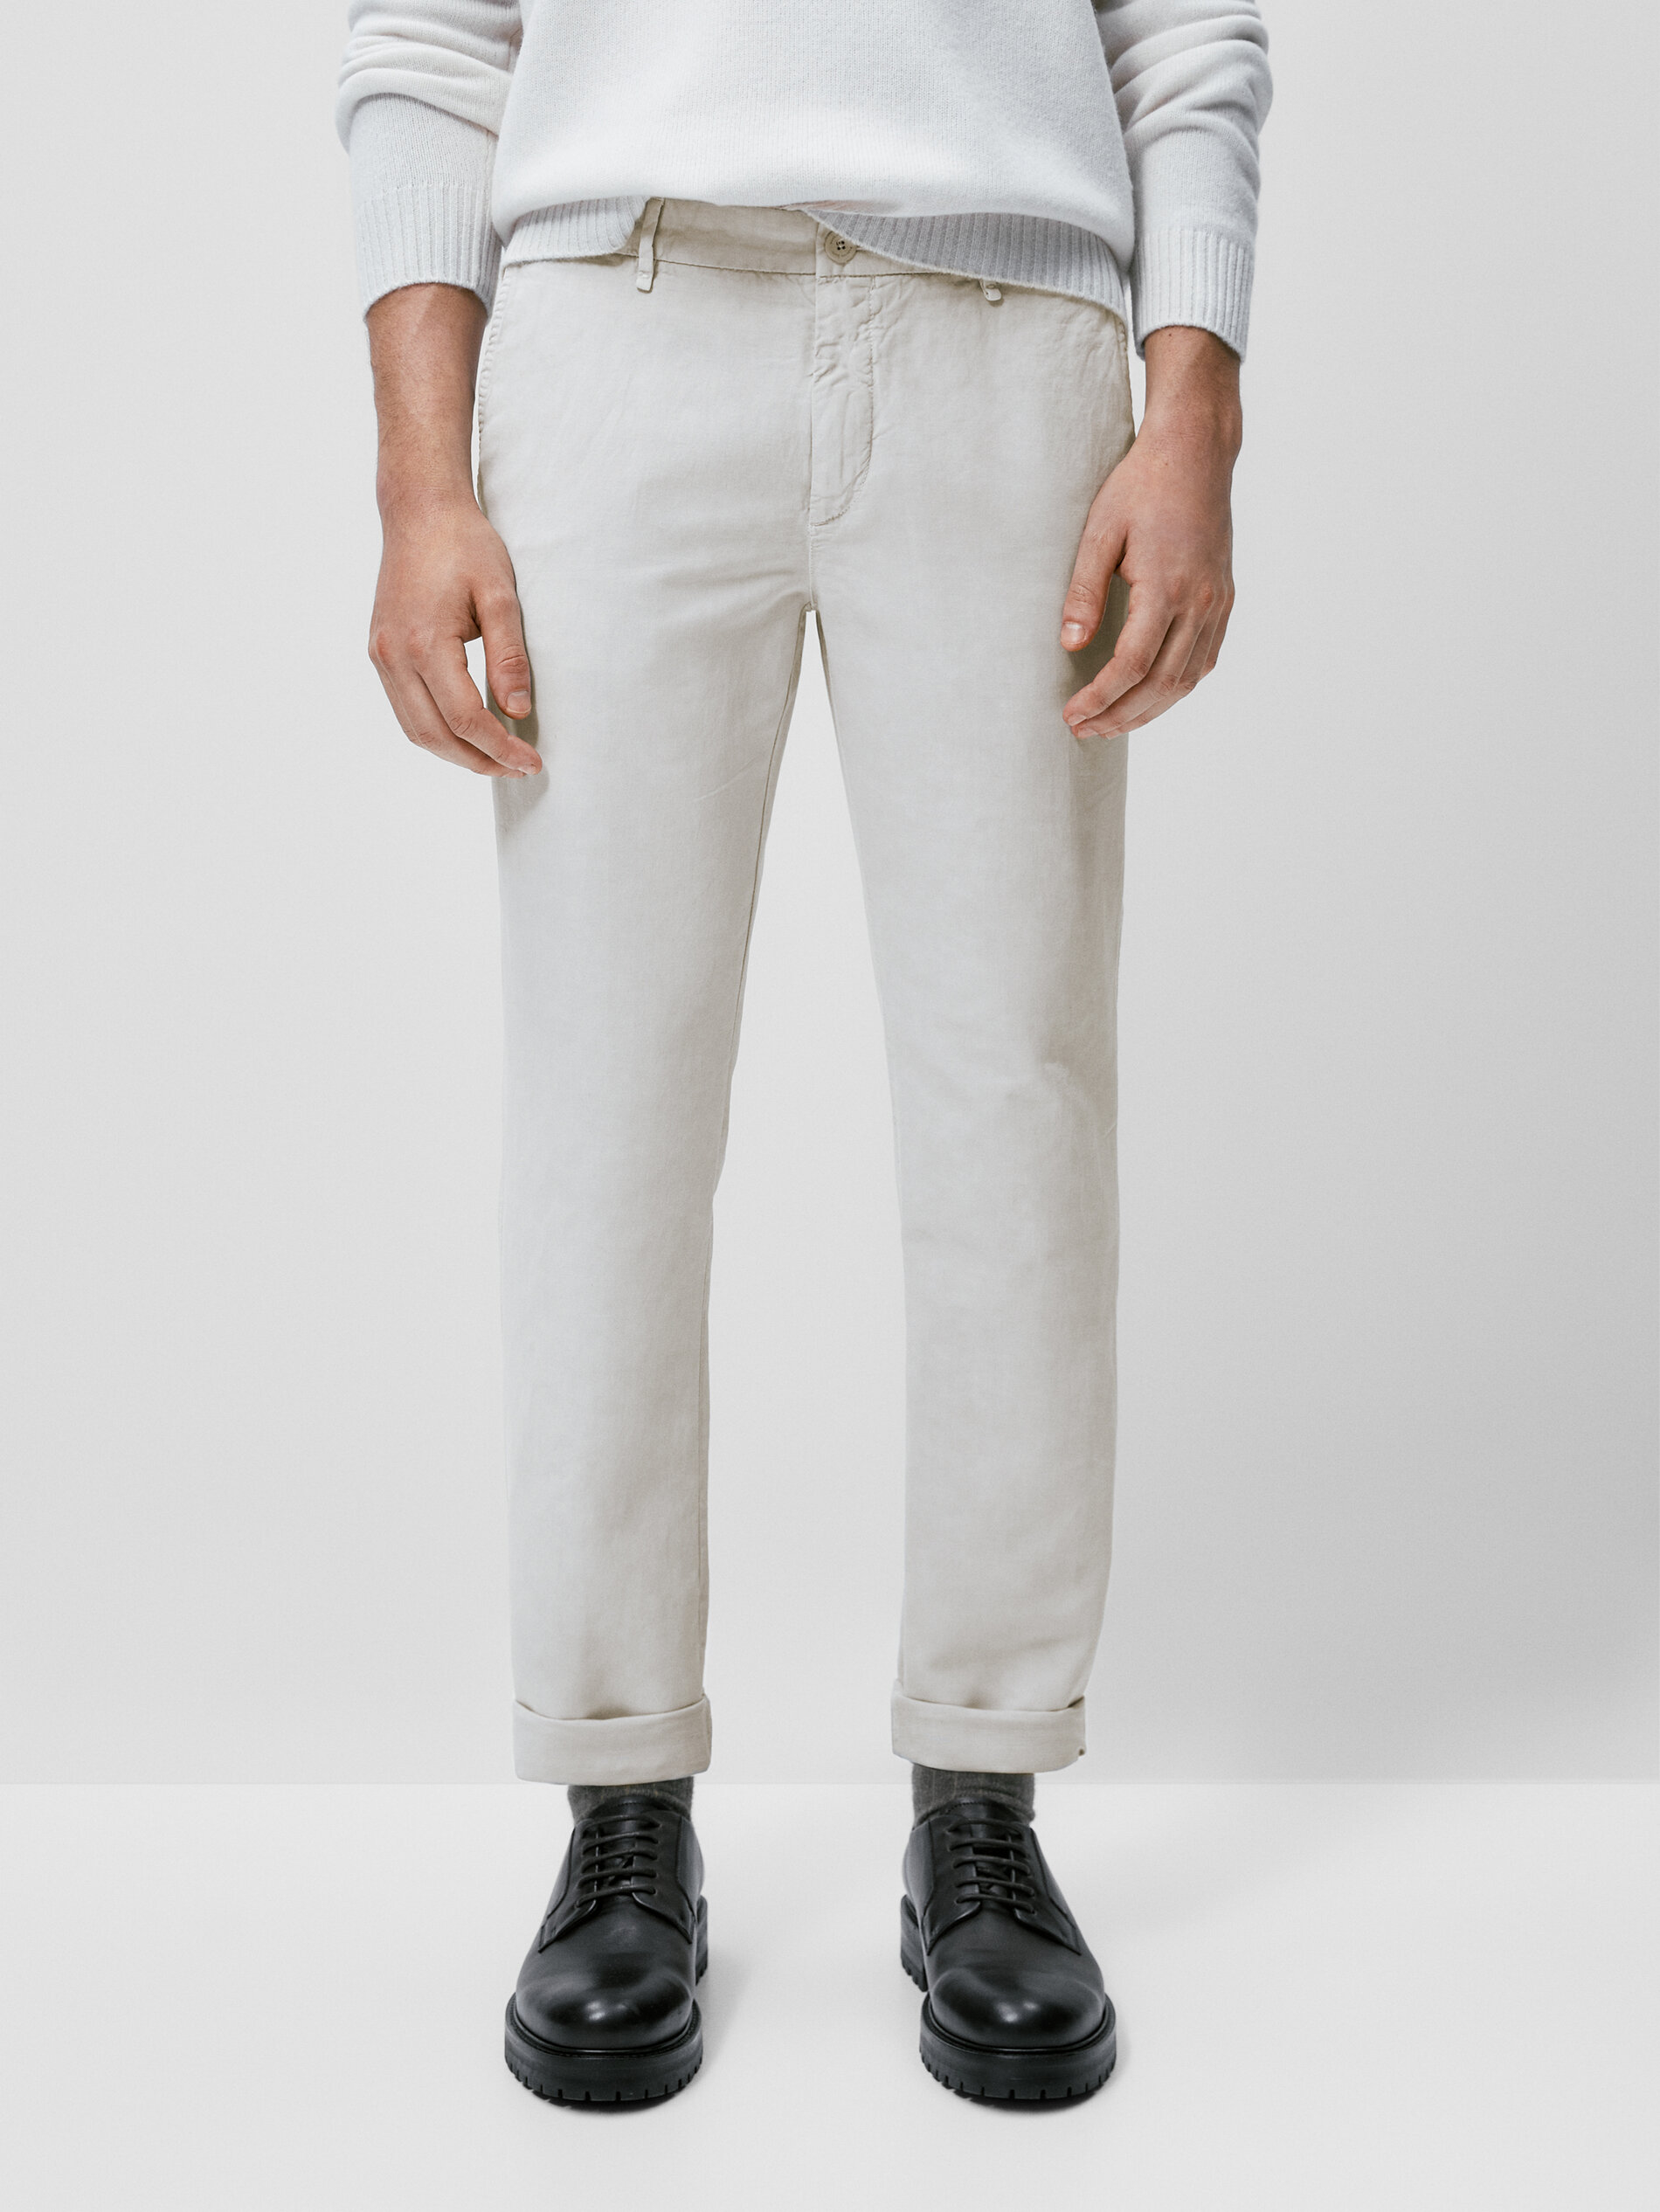 slim MEN FASHION Trousers Skinny Massimo Dutti slacks discount 64% Gray 32                  EU 